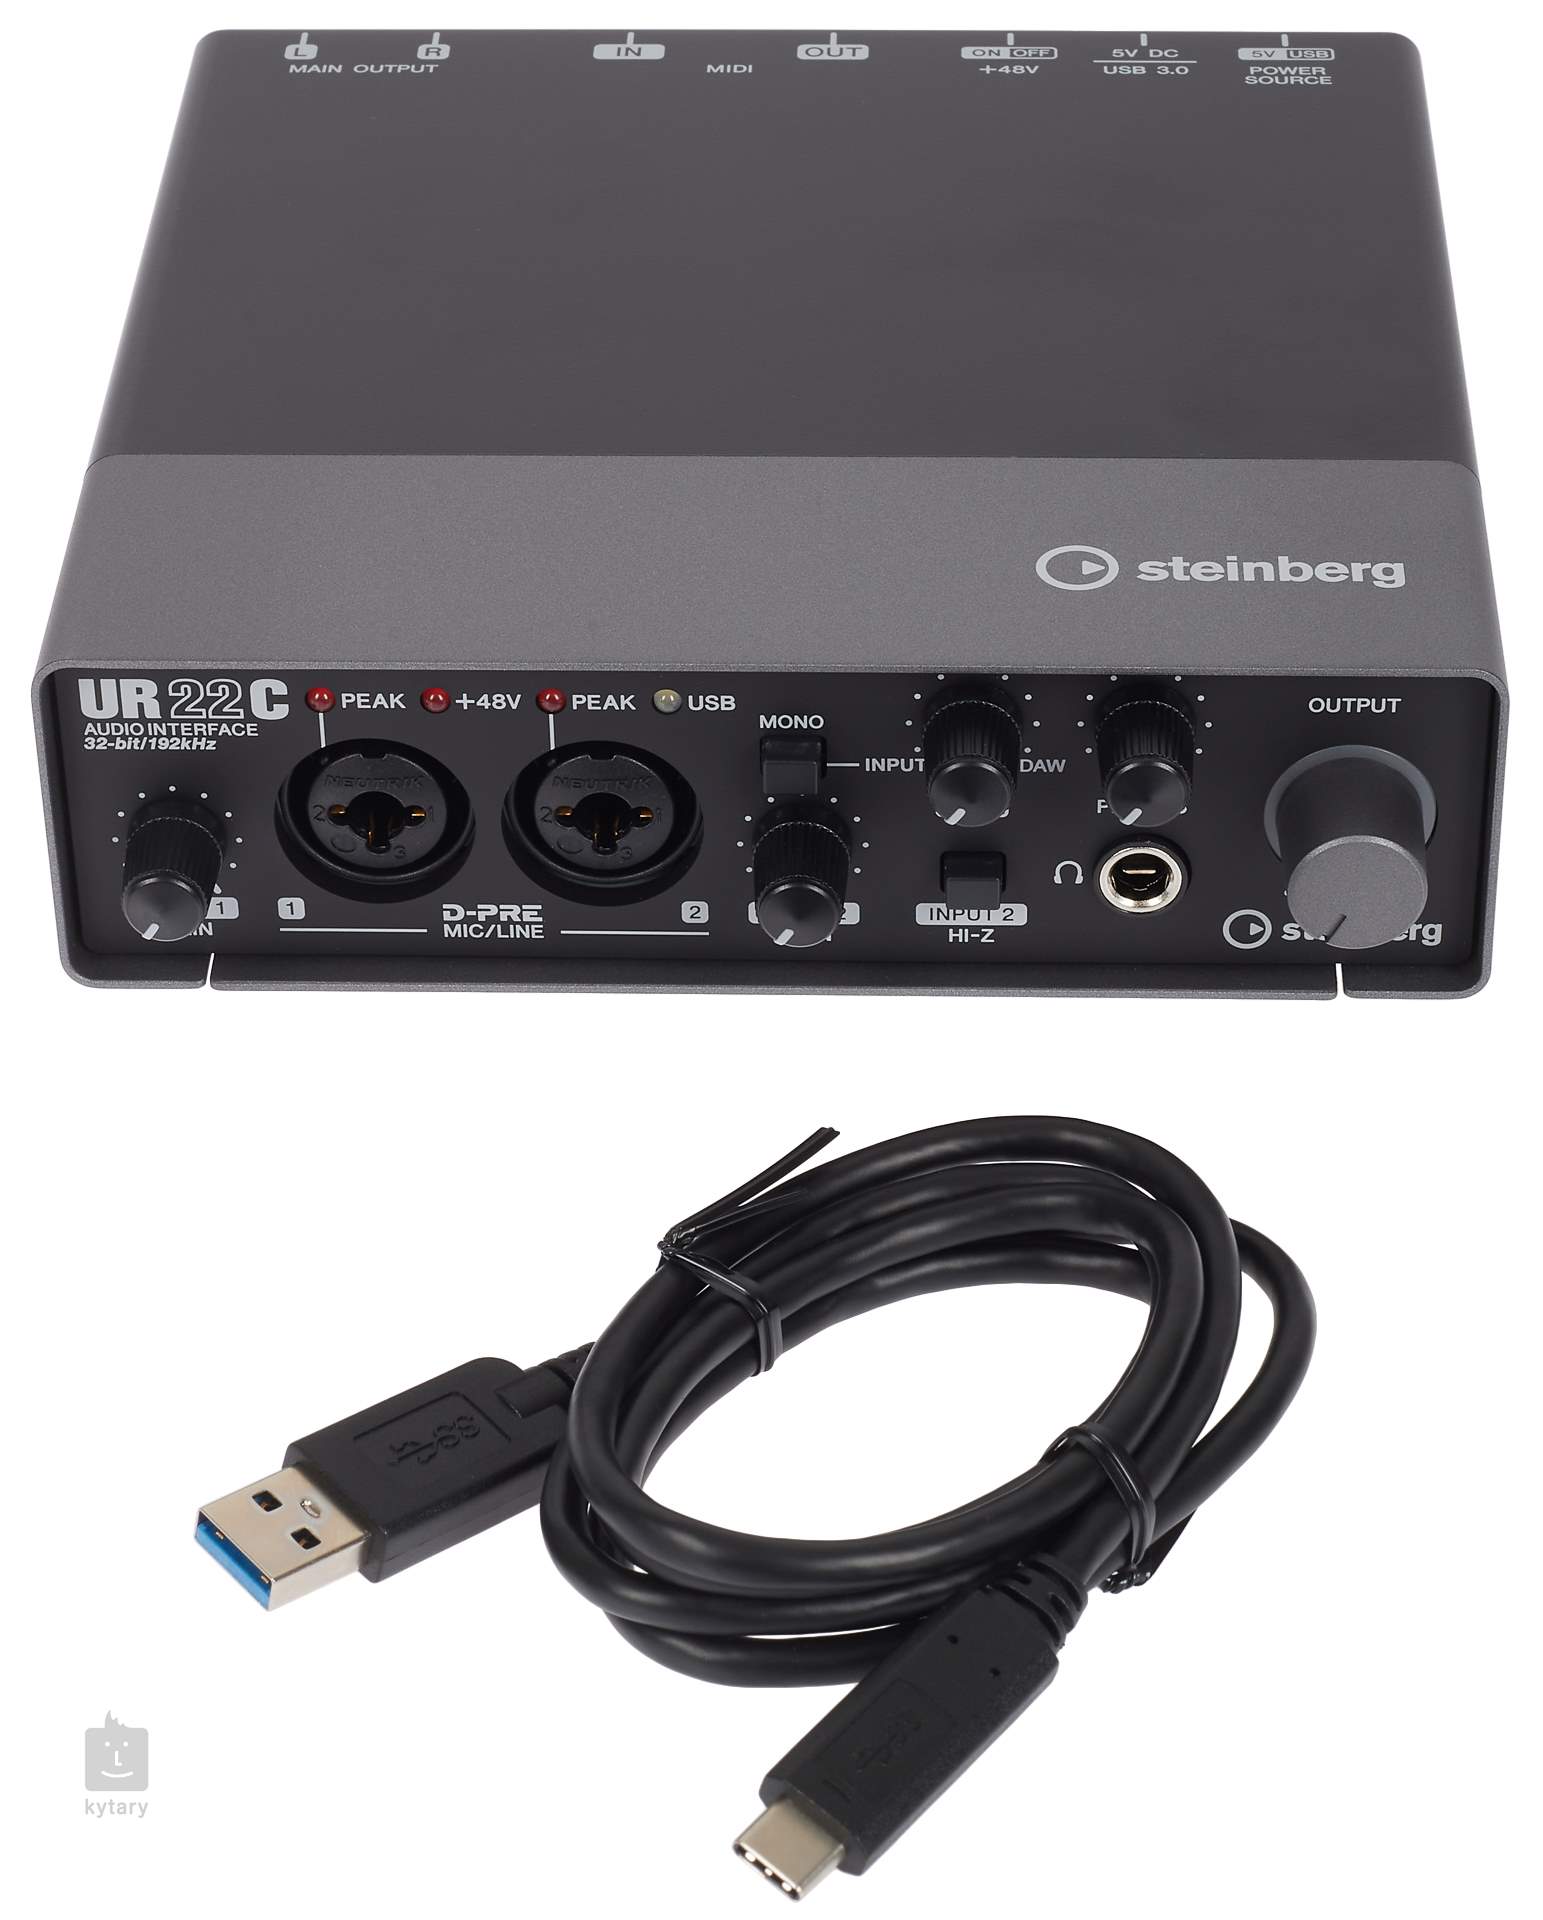 STEINBERG UR22C USB Audio Interface | Kytary.ie